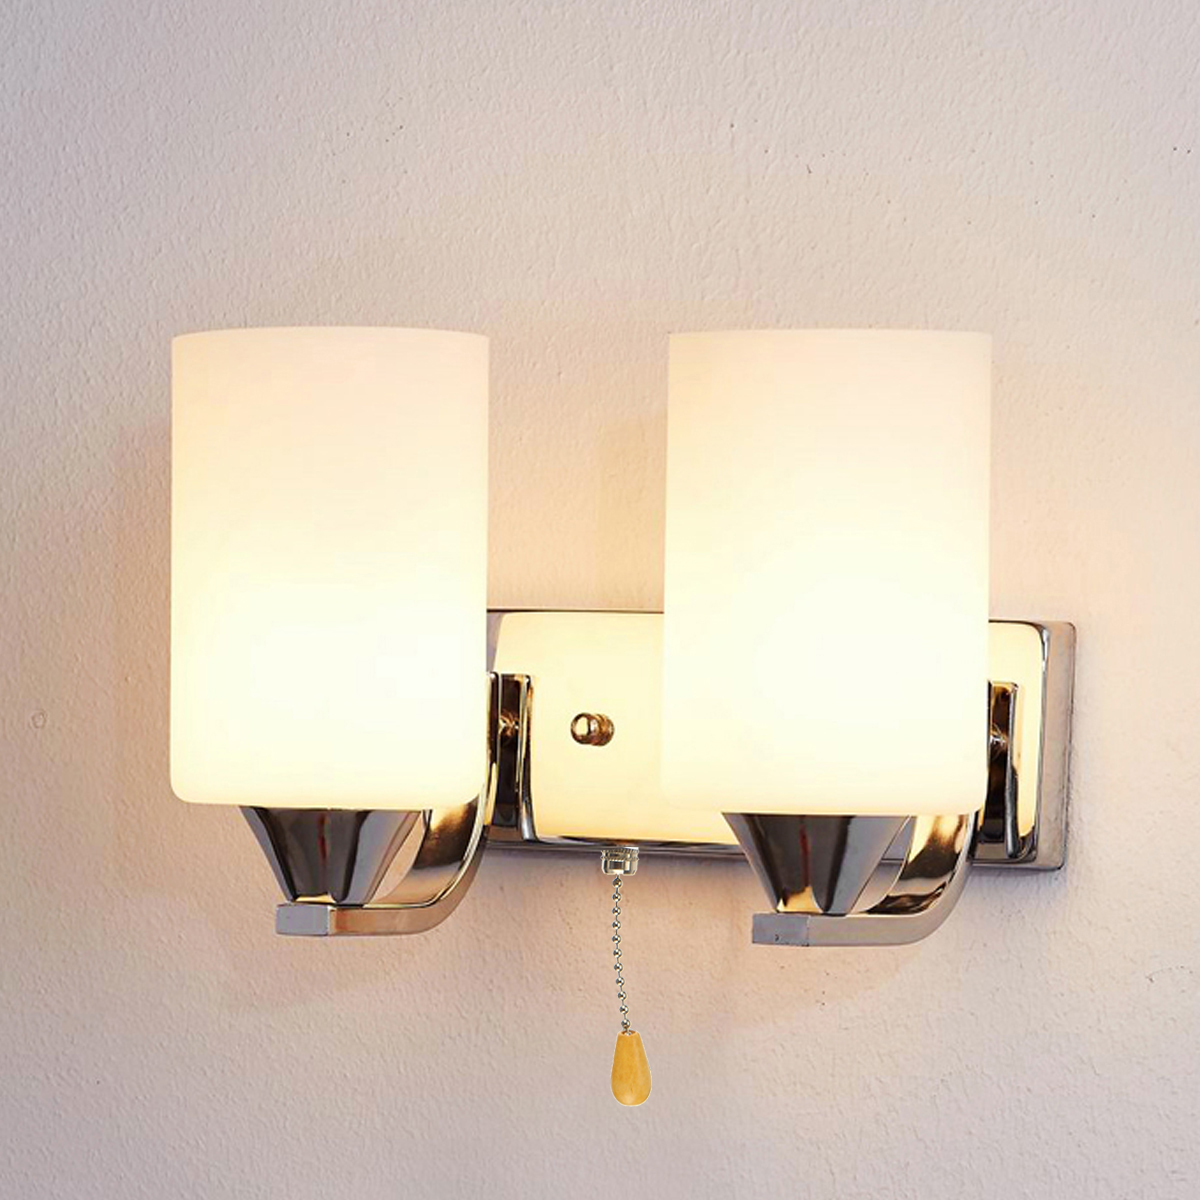 Glass-Wall-Light-Indoor-Sconce-Lighting-BedsideAisle-Lamp-Fixture--LED-Bulb-1809891-6